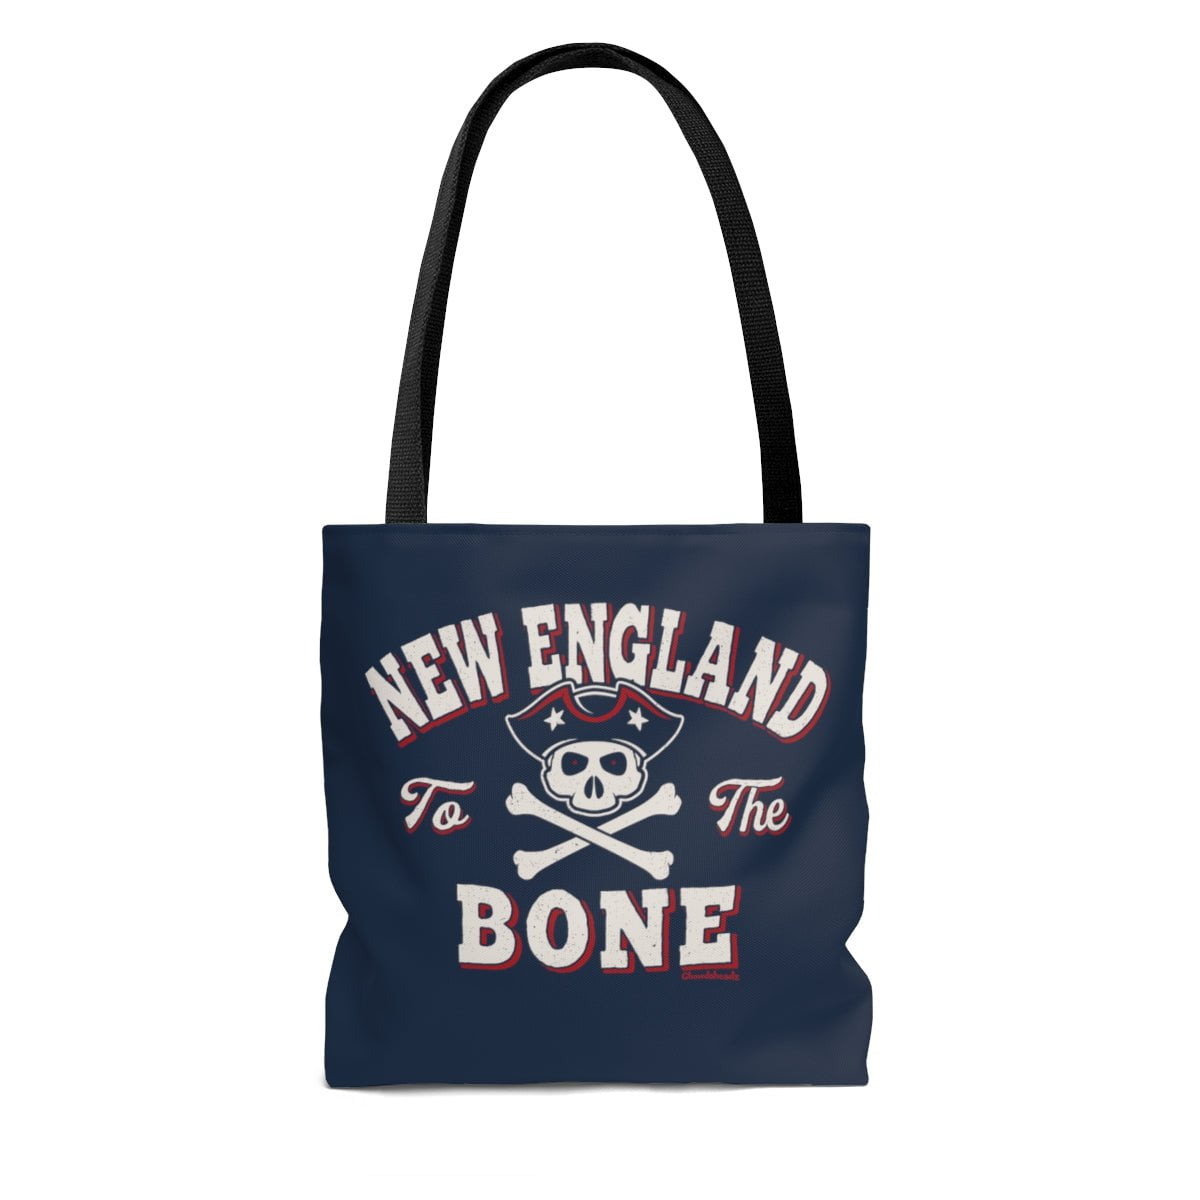 New England To The Bone Tote Bag - Chowdaheadz